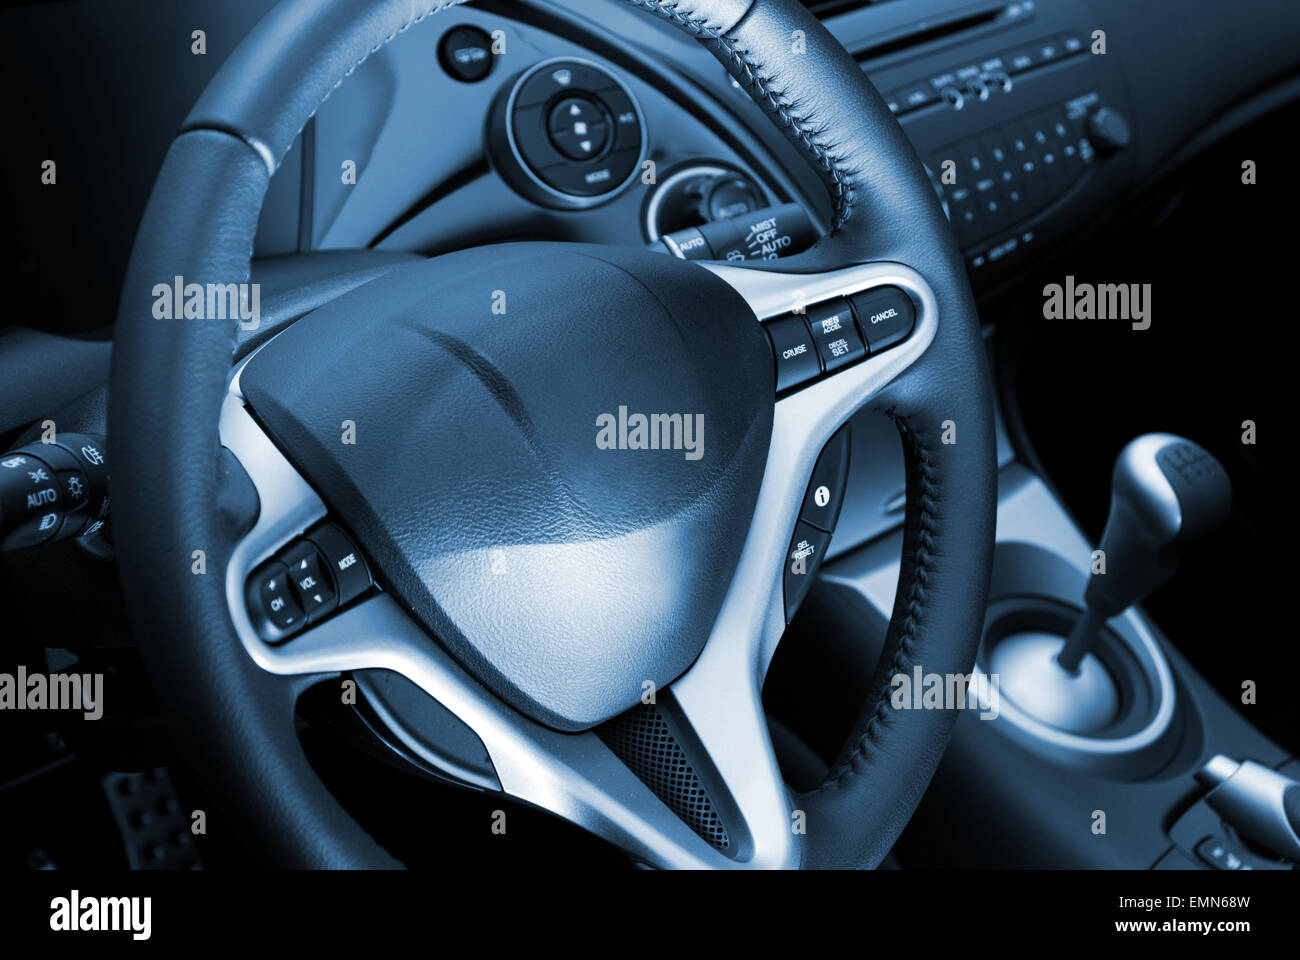 Auto-Innenausstattung in blau getönt Stockfotografie - Alamy